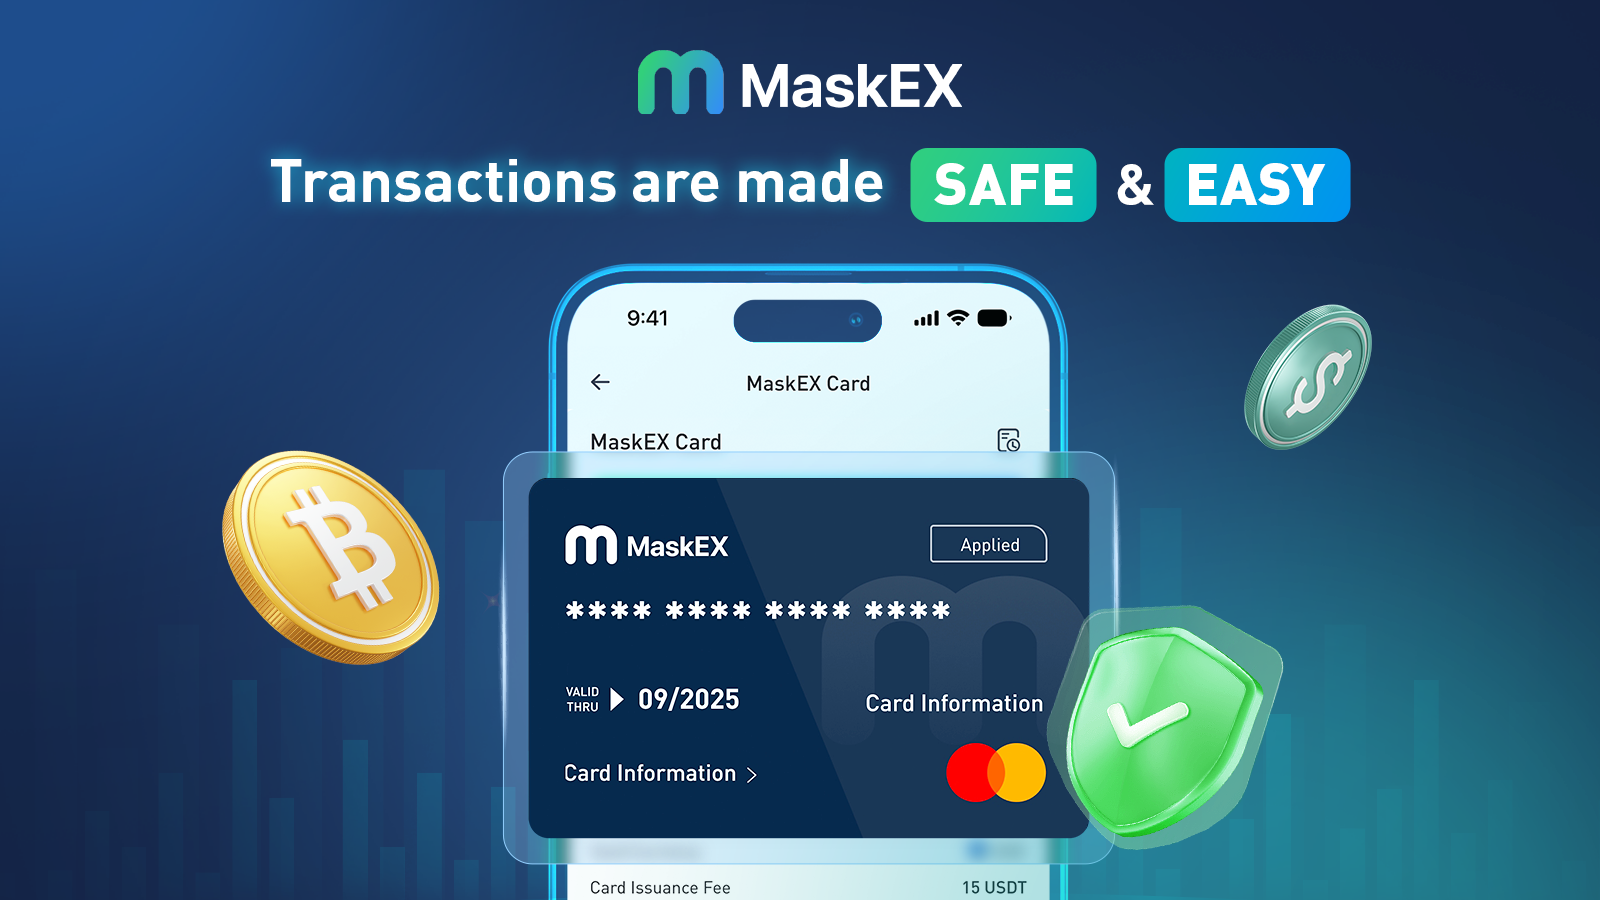 MaskEX New Virtual Card goes LIVE!